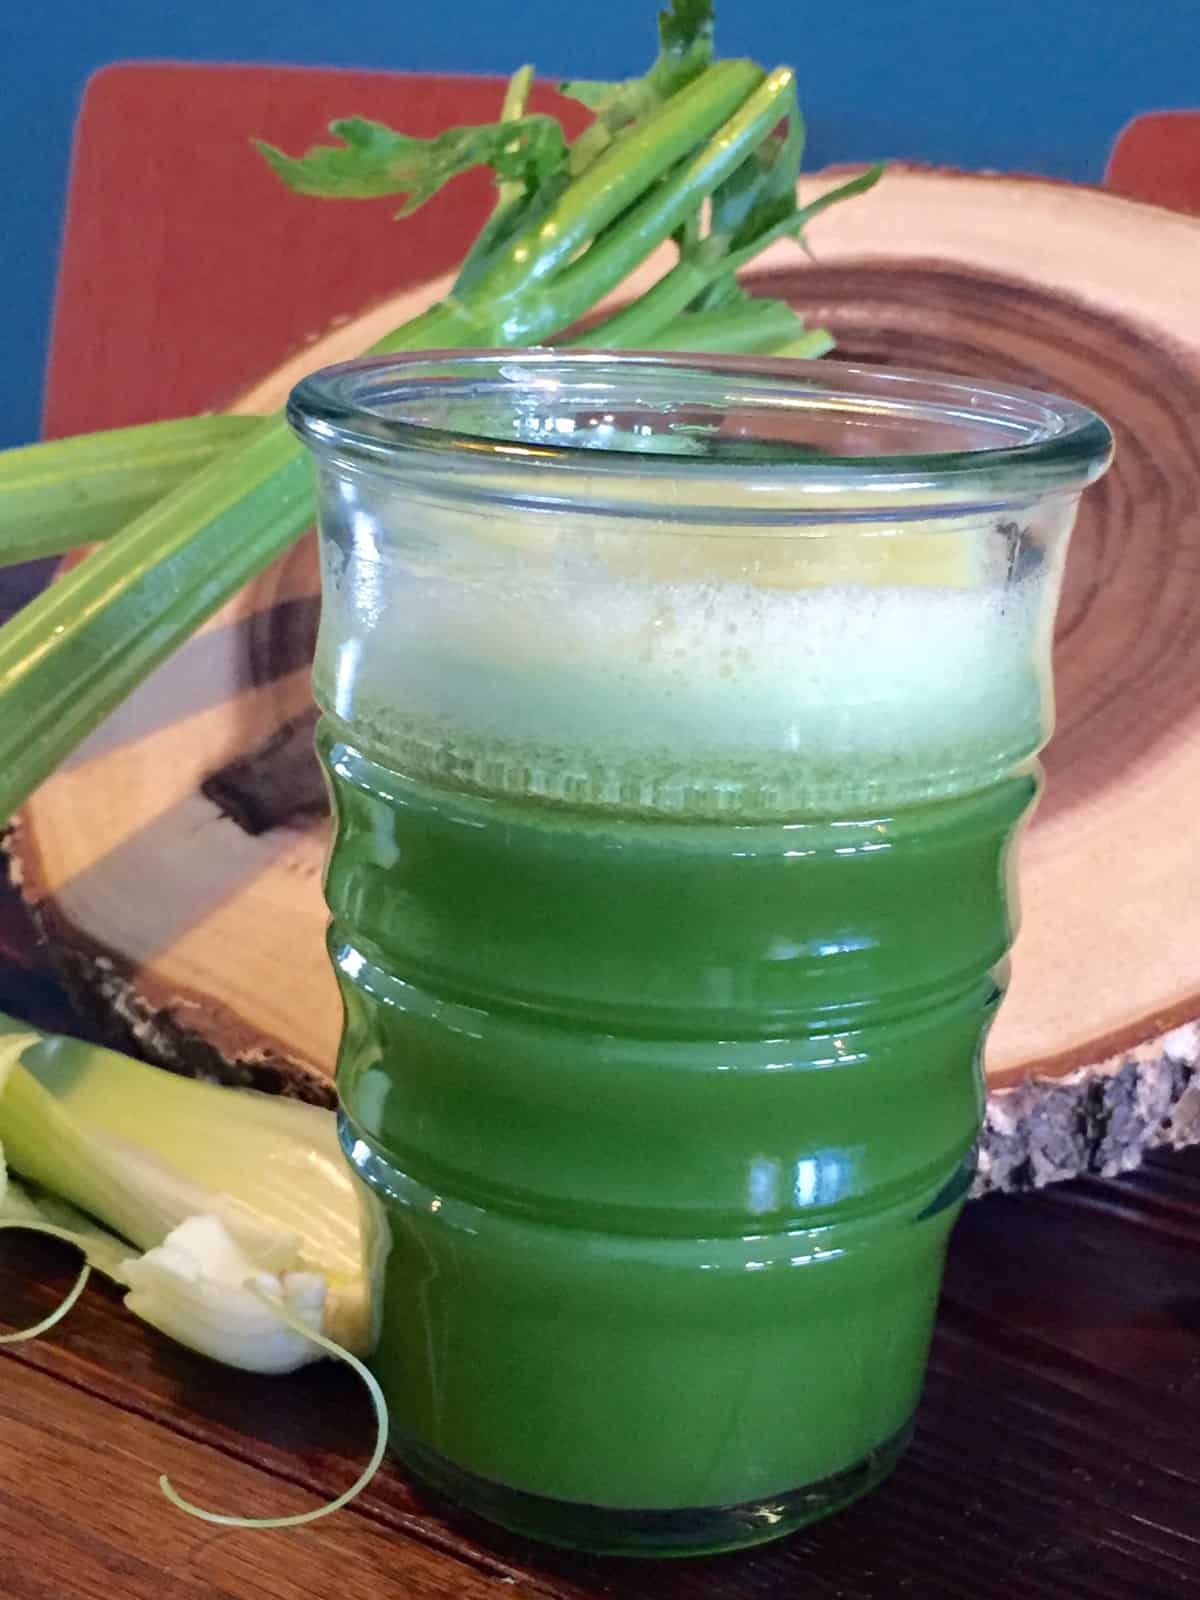 A glass of celery juice